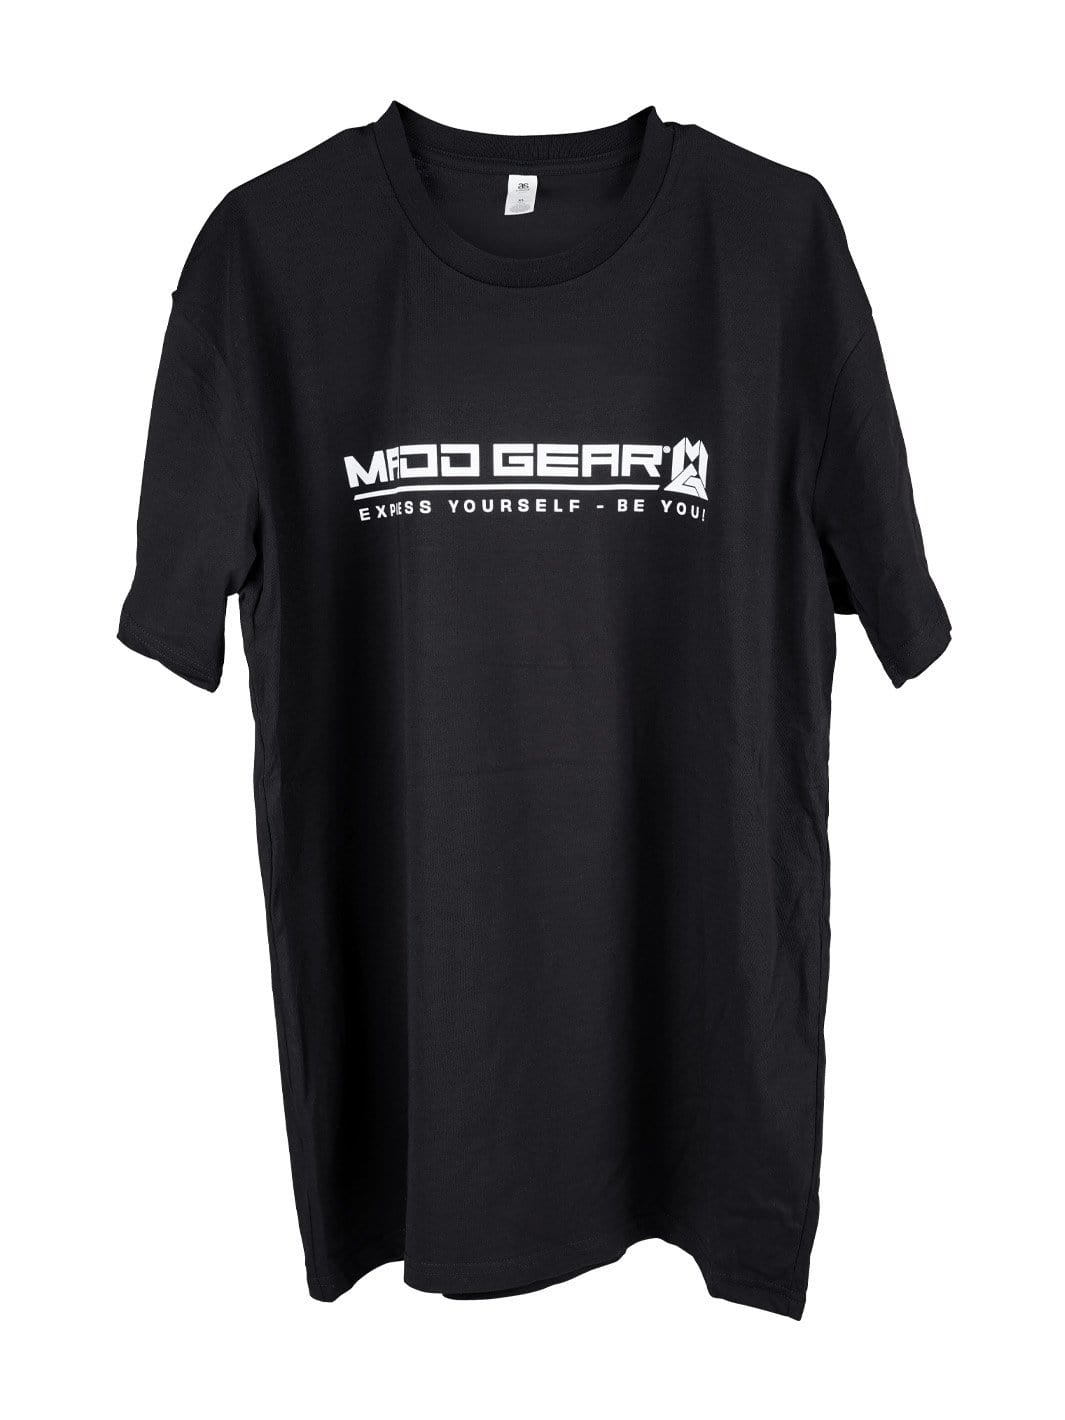 Madd Gear MGP Black Tee T Shirt TShirt T-Shirt Mens Womens Kids Children Skate Scooter Quality Park